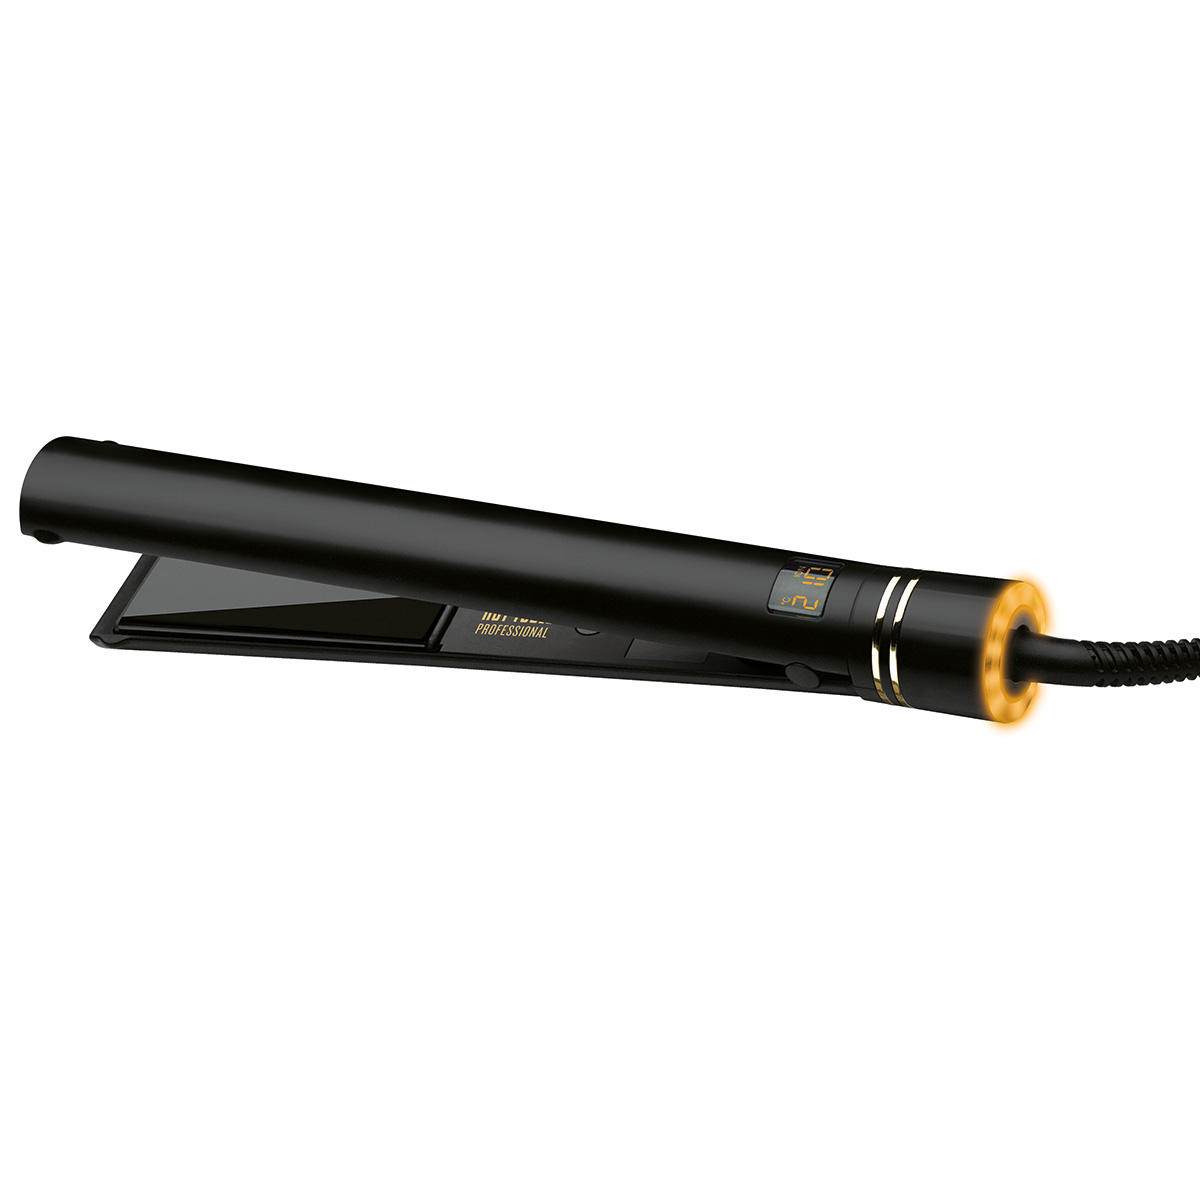 Hot Tools Raddrizzatore digitale Evolve Black Gold 25 mm - 2